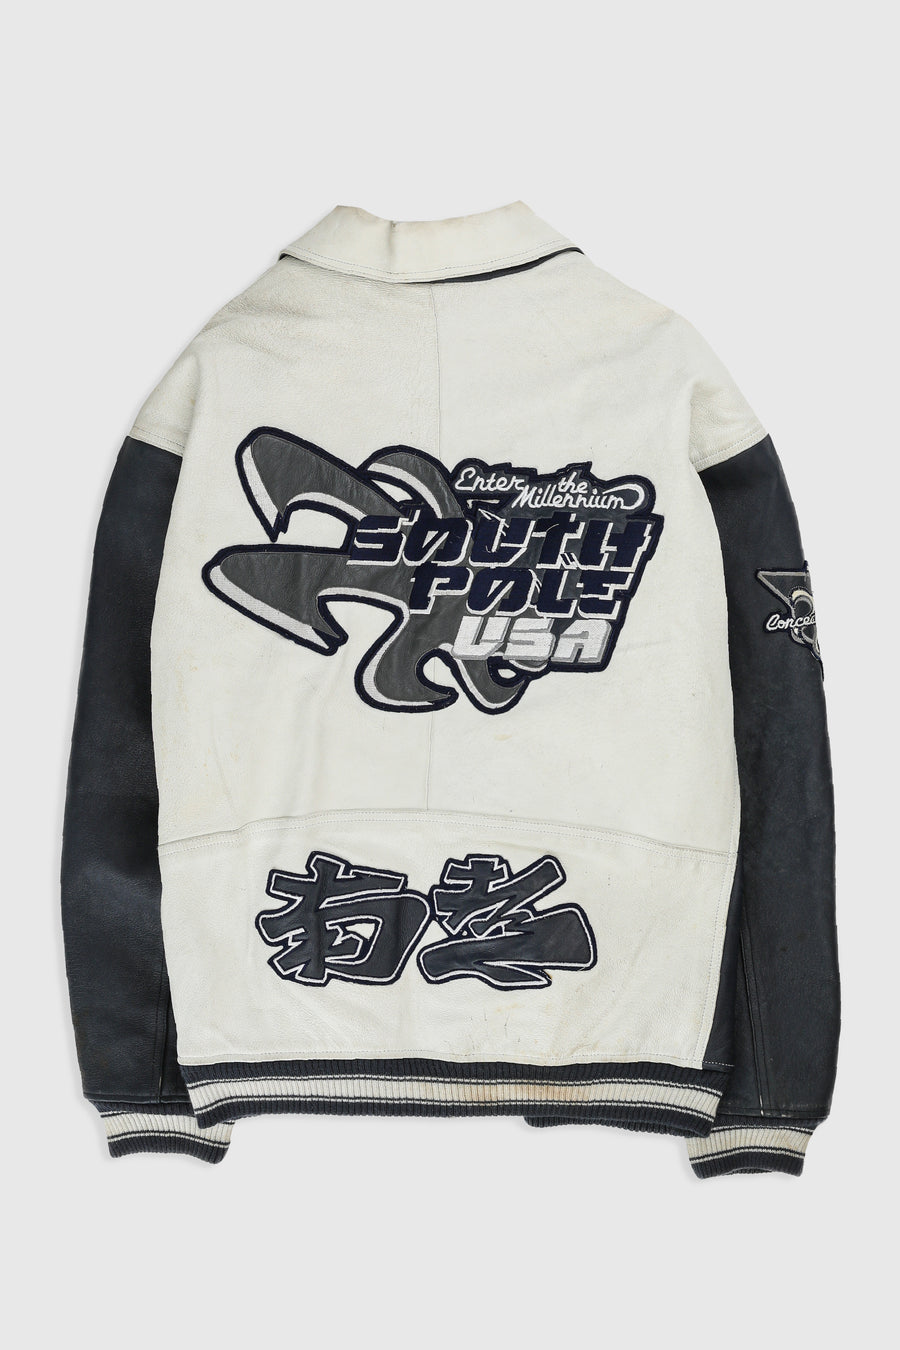 Vintage South Pole Leather Jacket - 2XL